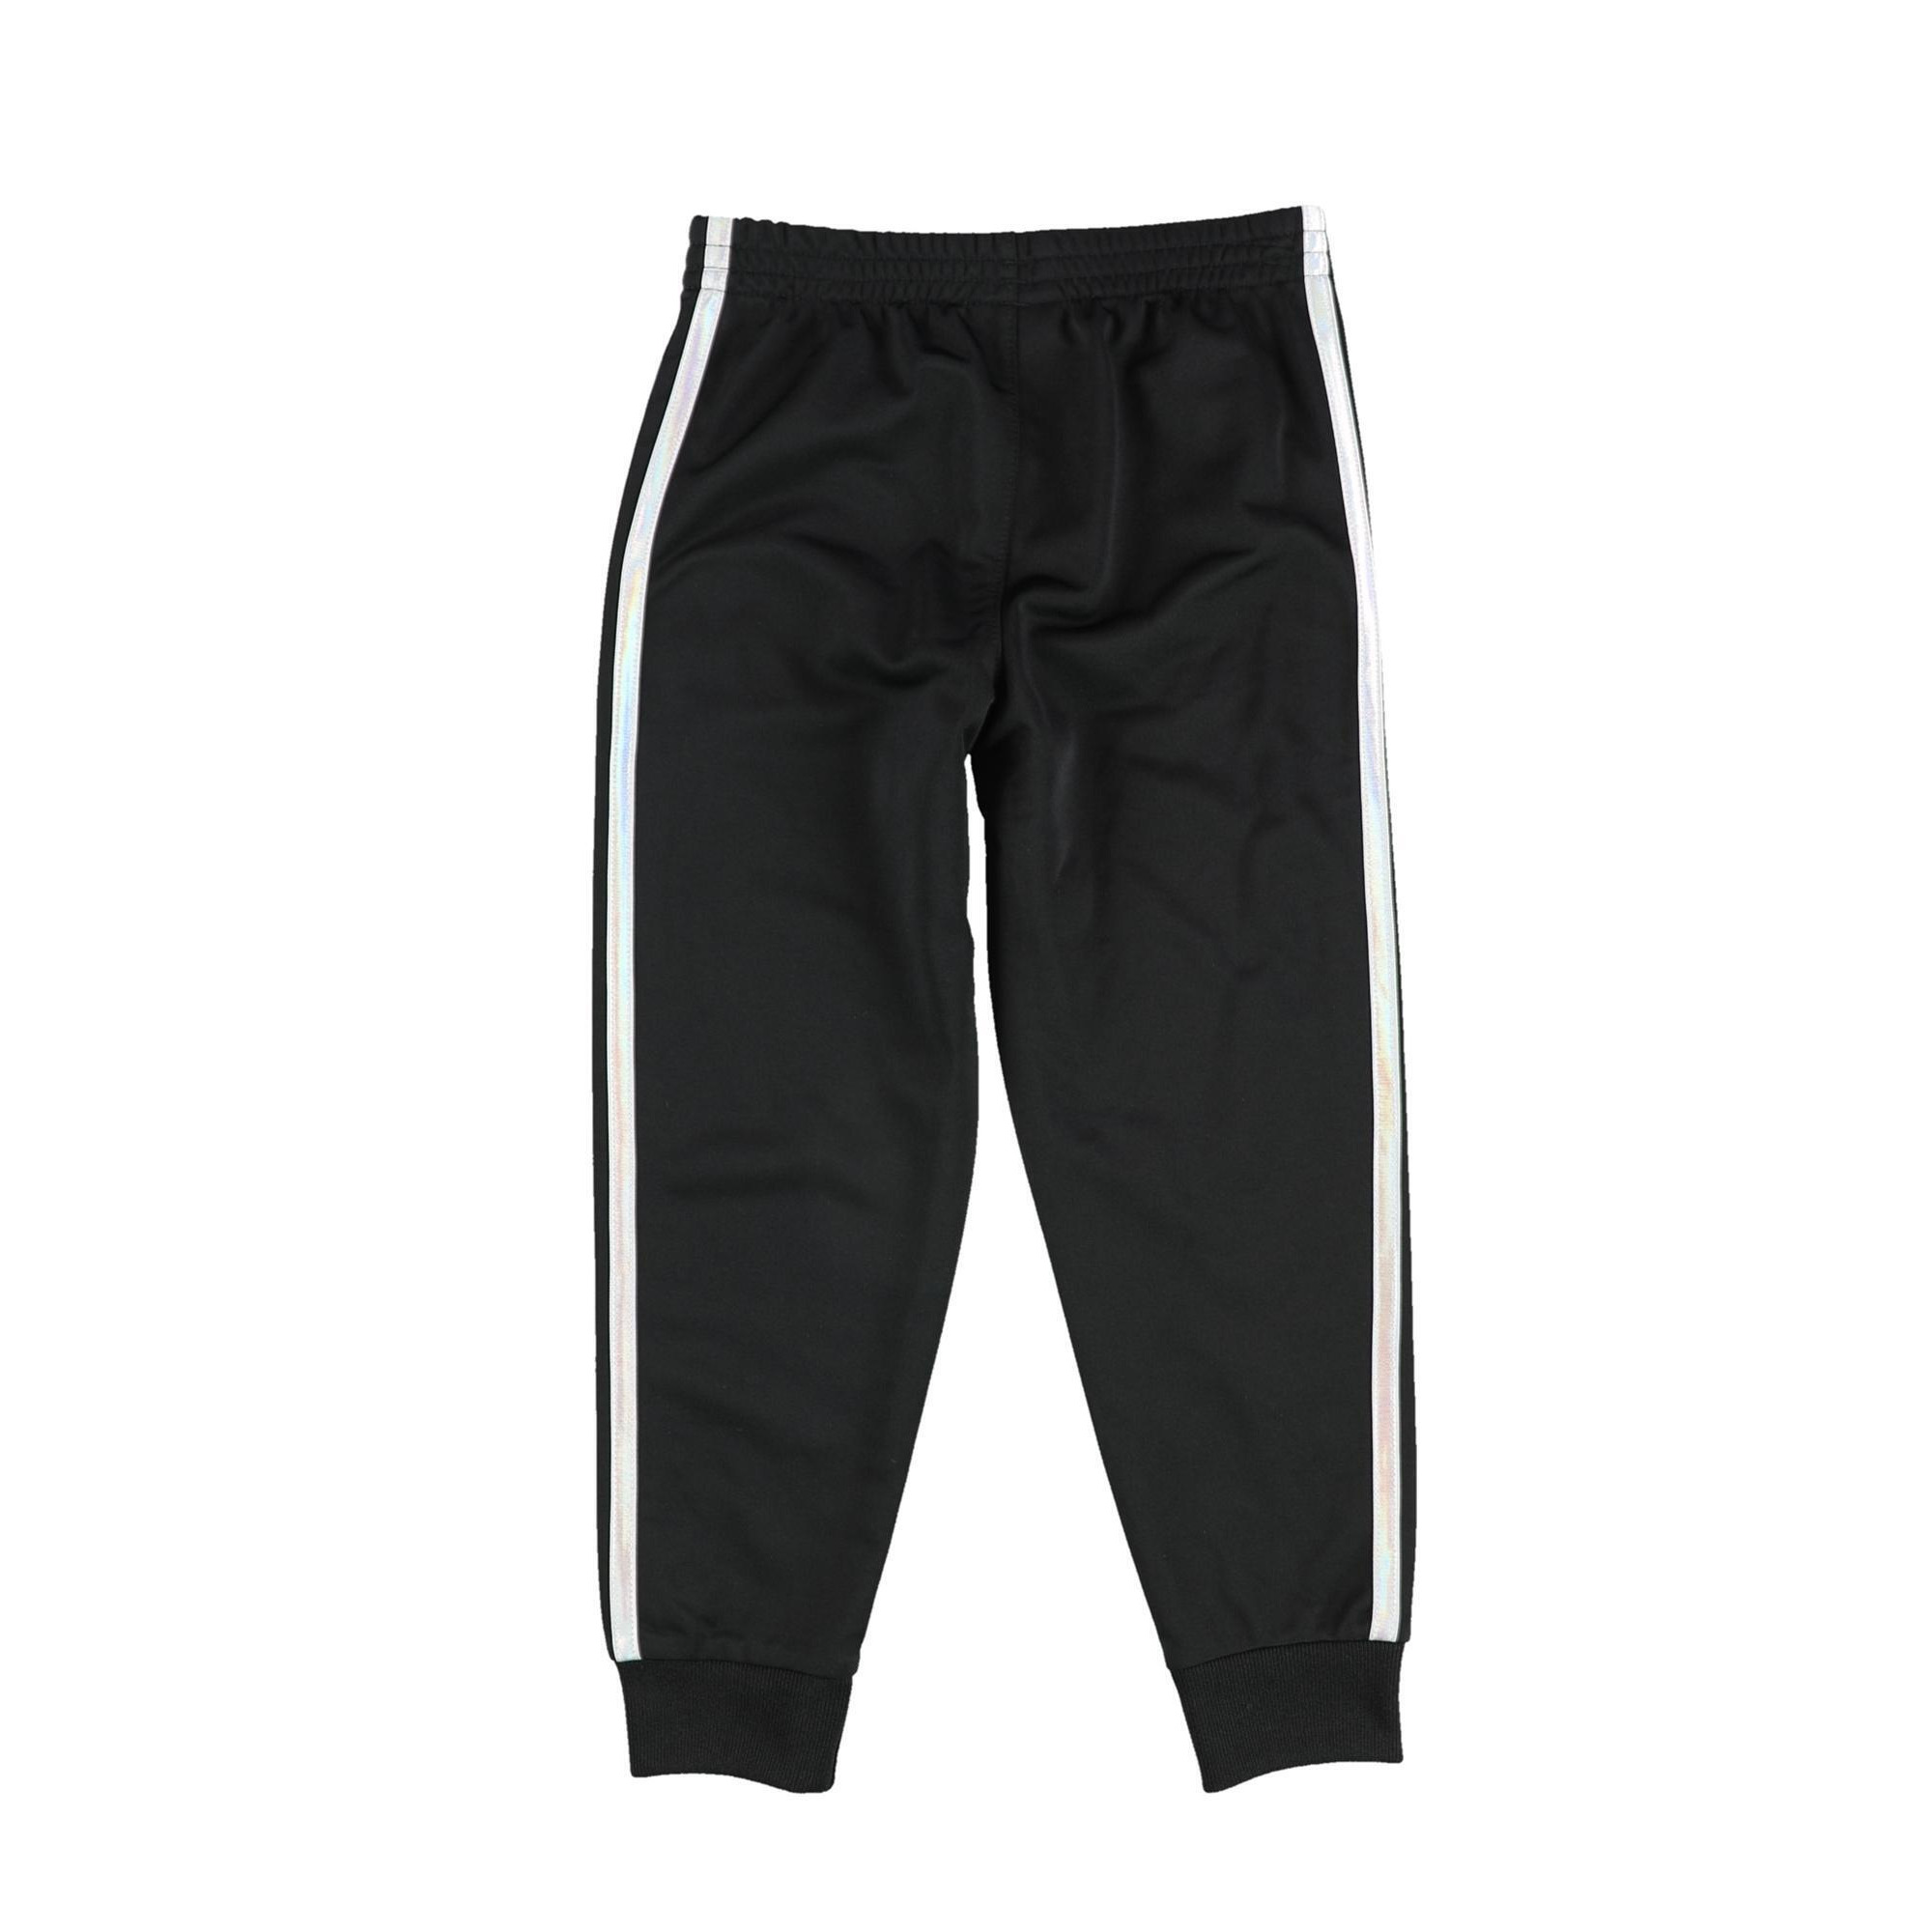 Adidas Girls Colorblock Athletic Track Pants, Style # AG4454-B alternate image